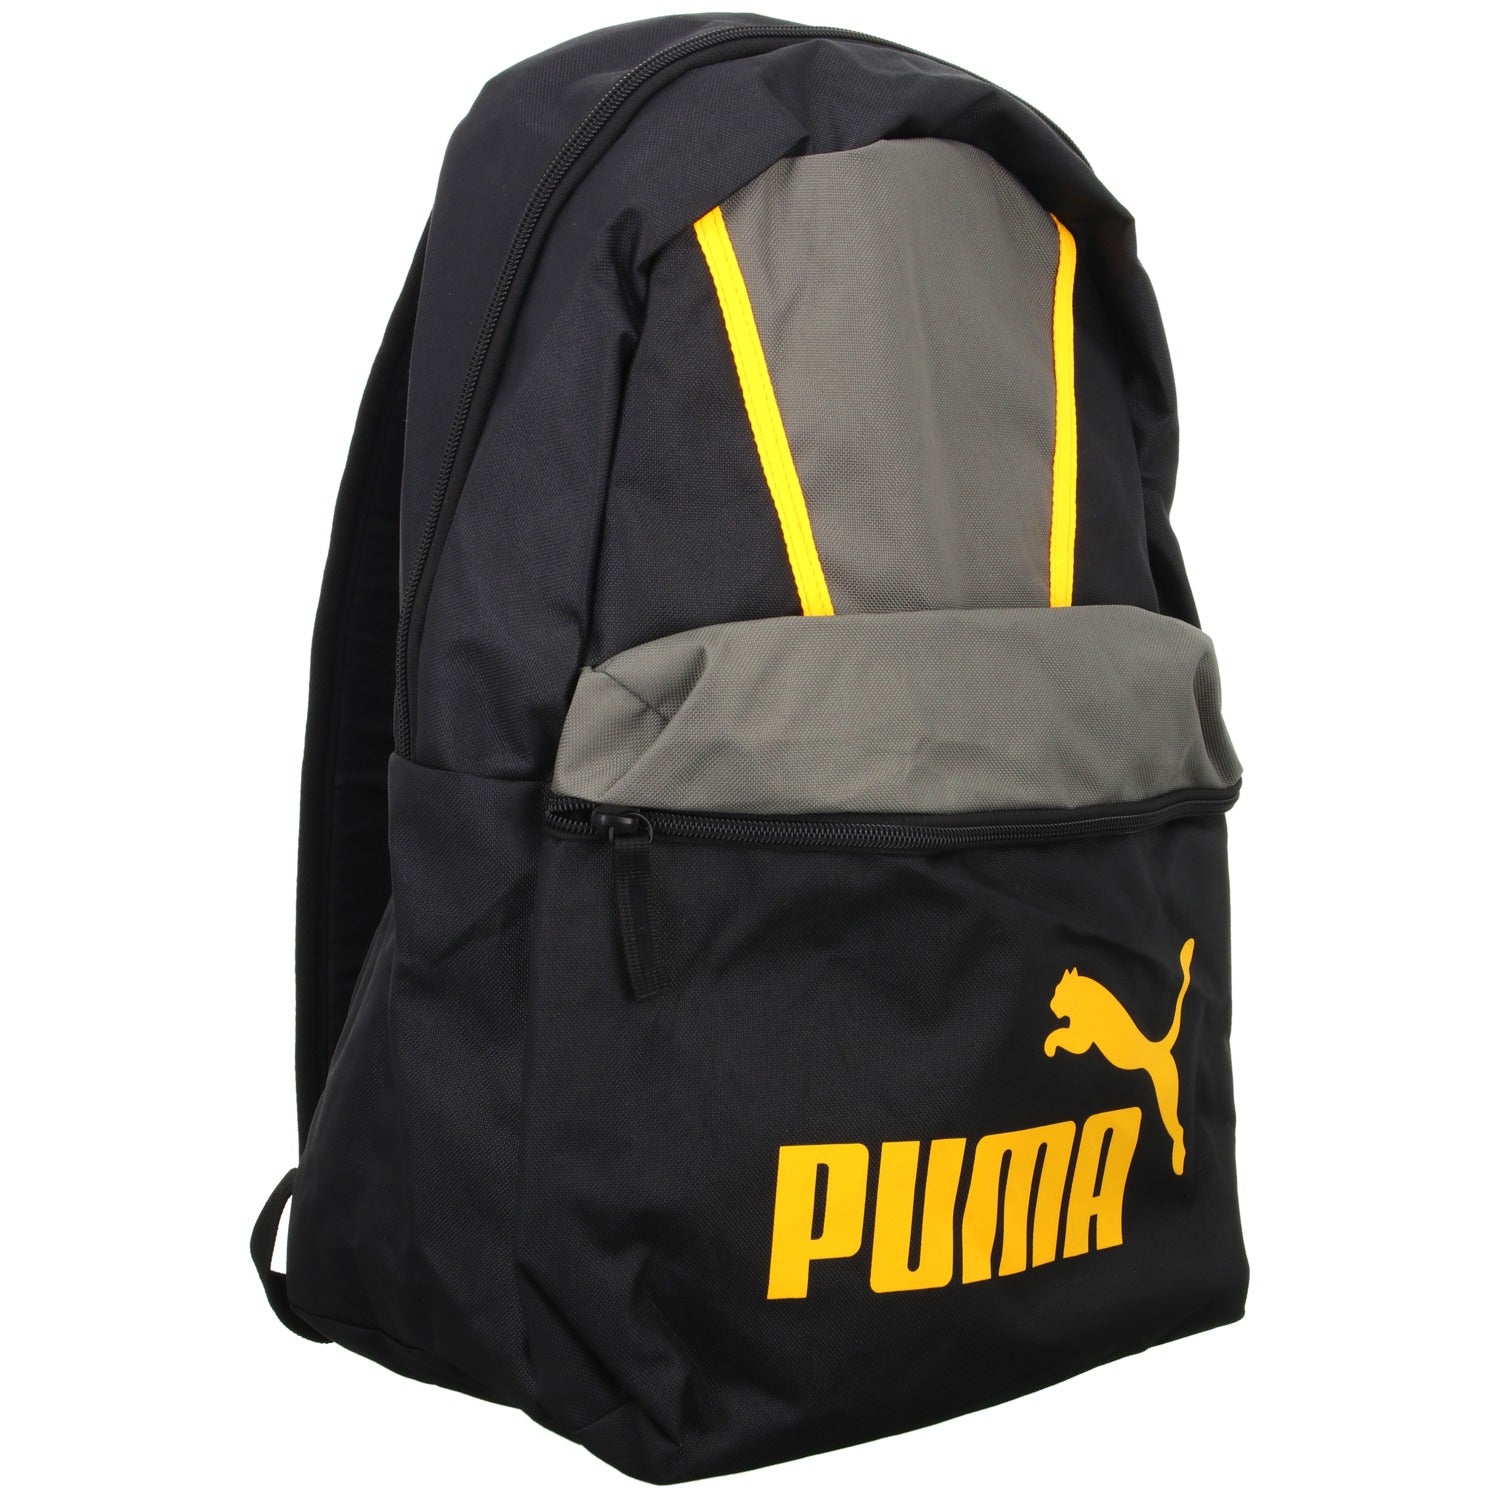 Puma Sportrucksack Phase Blocking Backpack